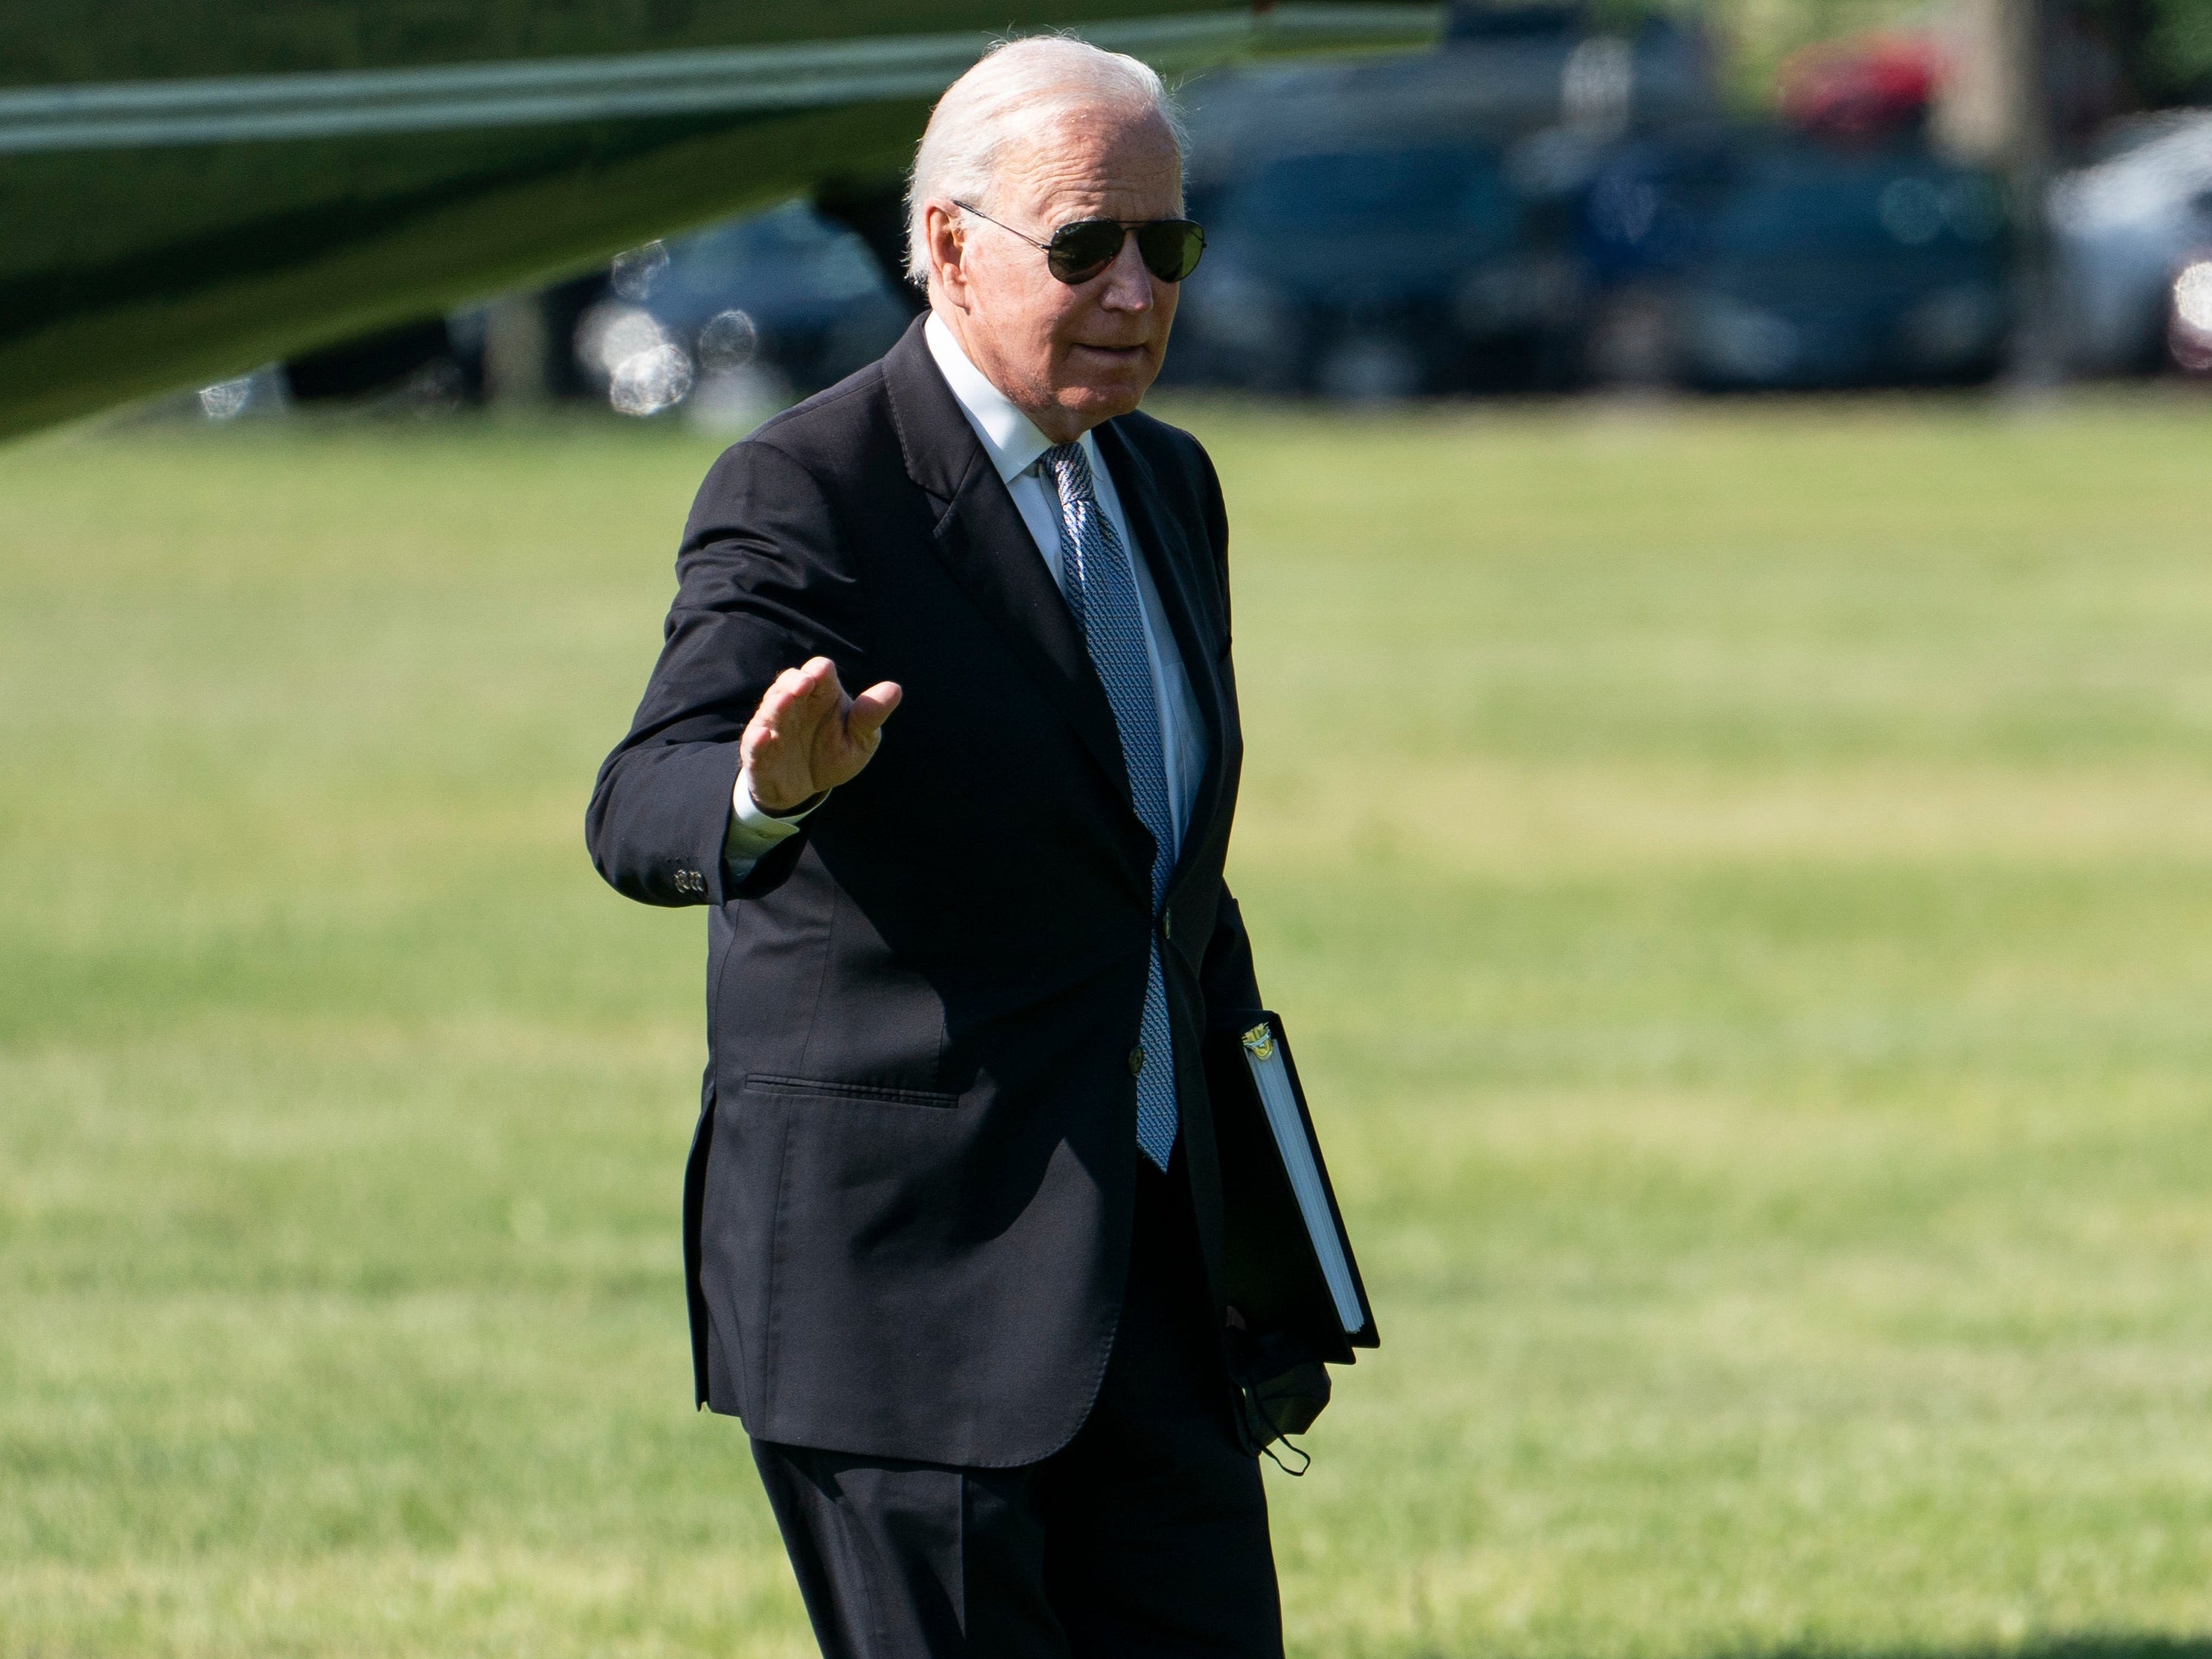 US president Joe Biden